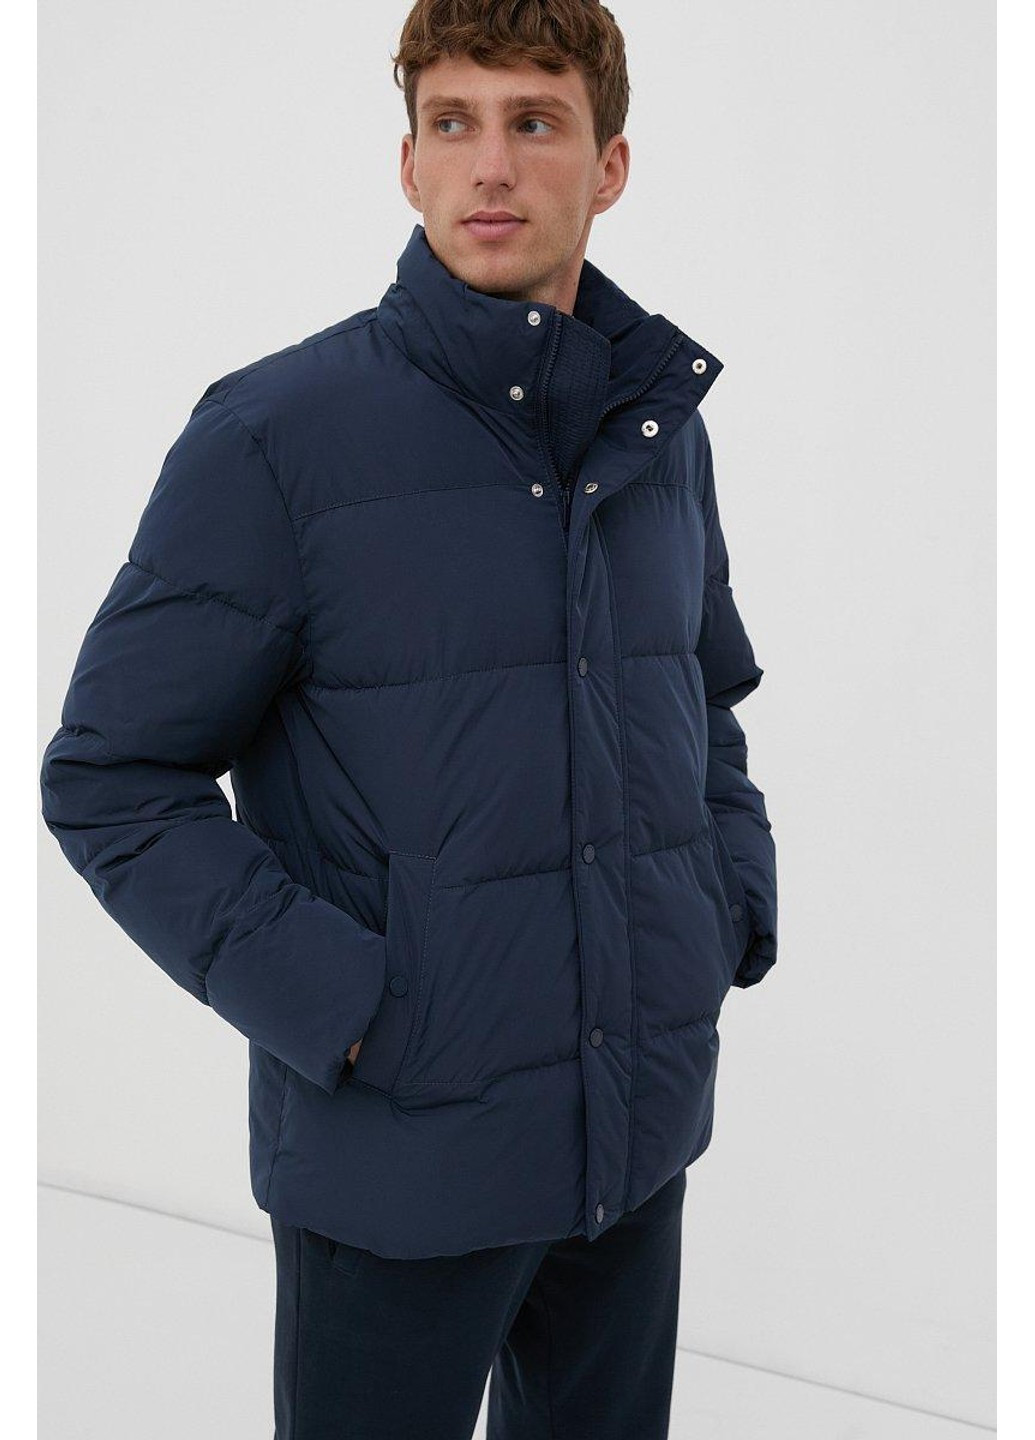 Синяя зимняя зимняя куртка fac21004-101 Finn Flare